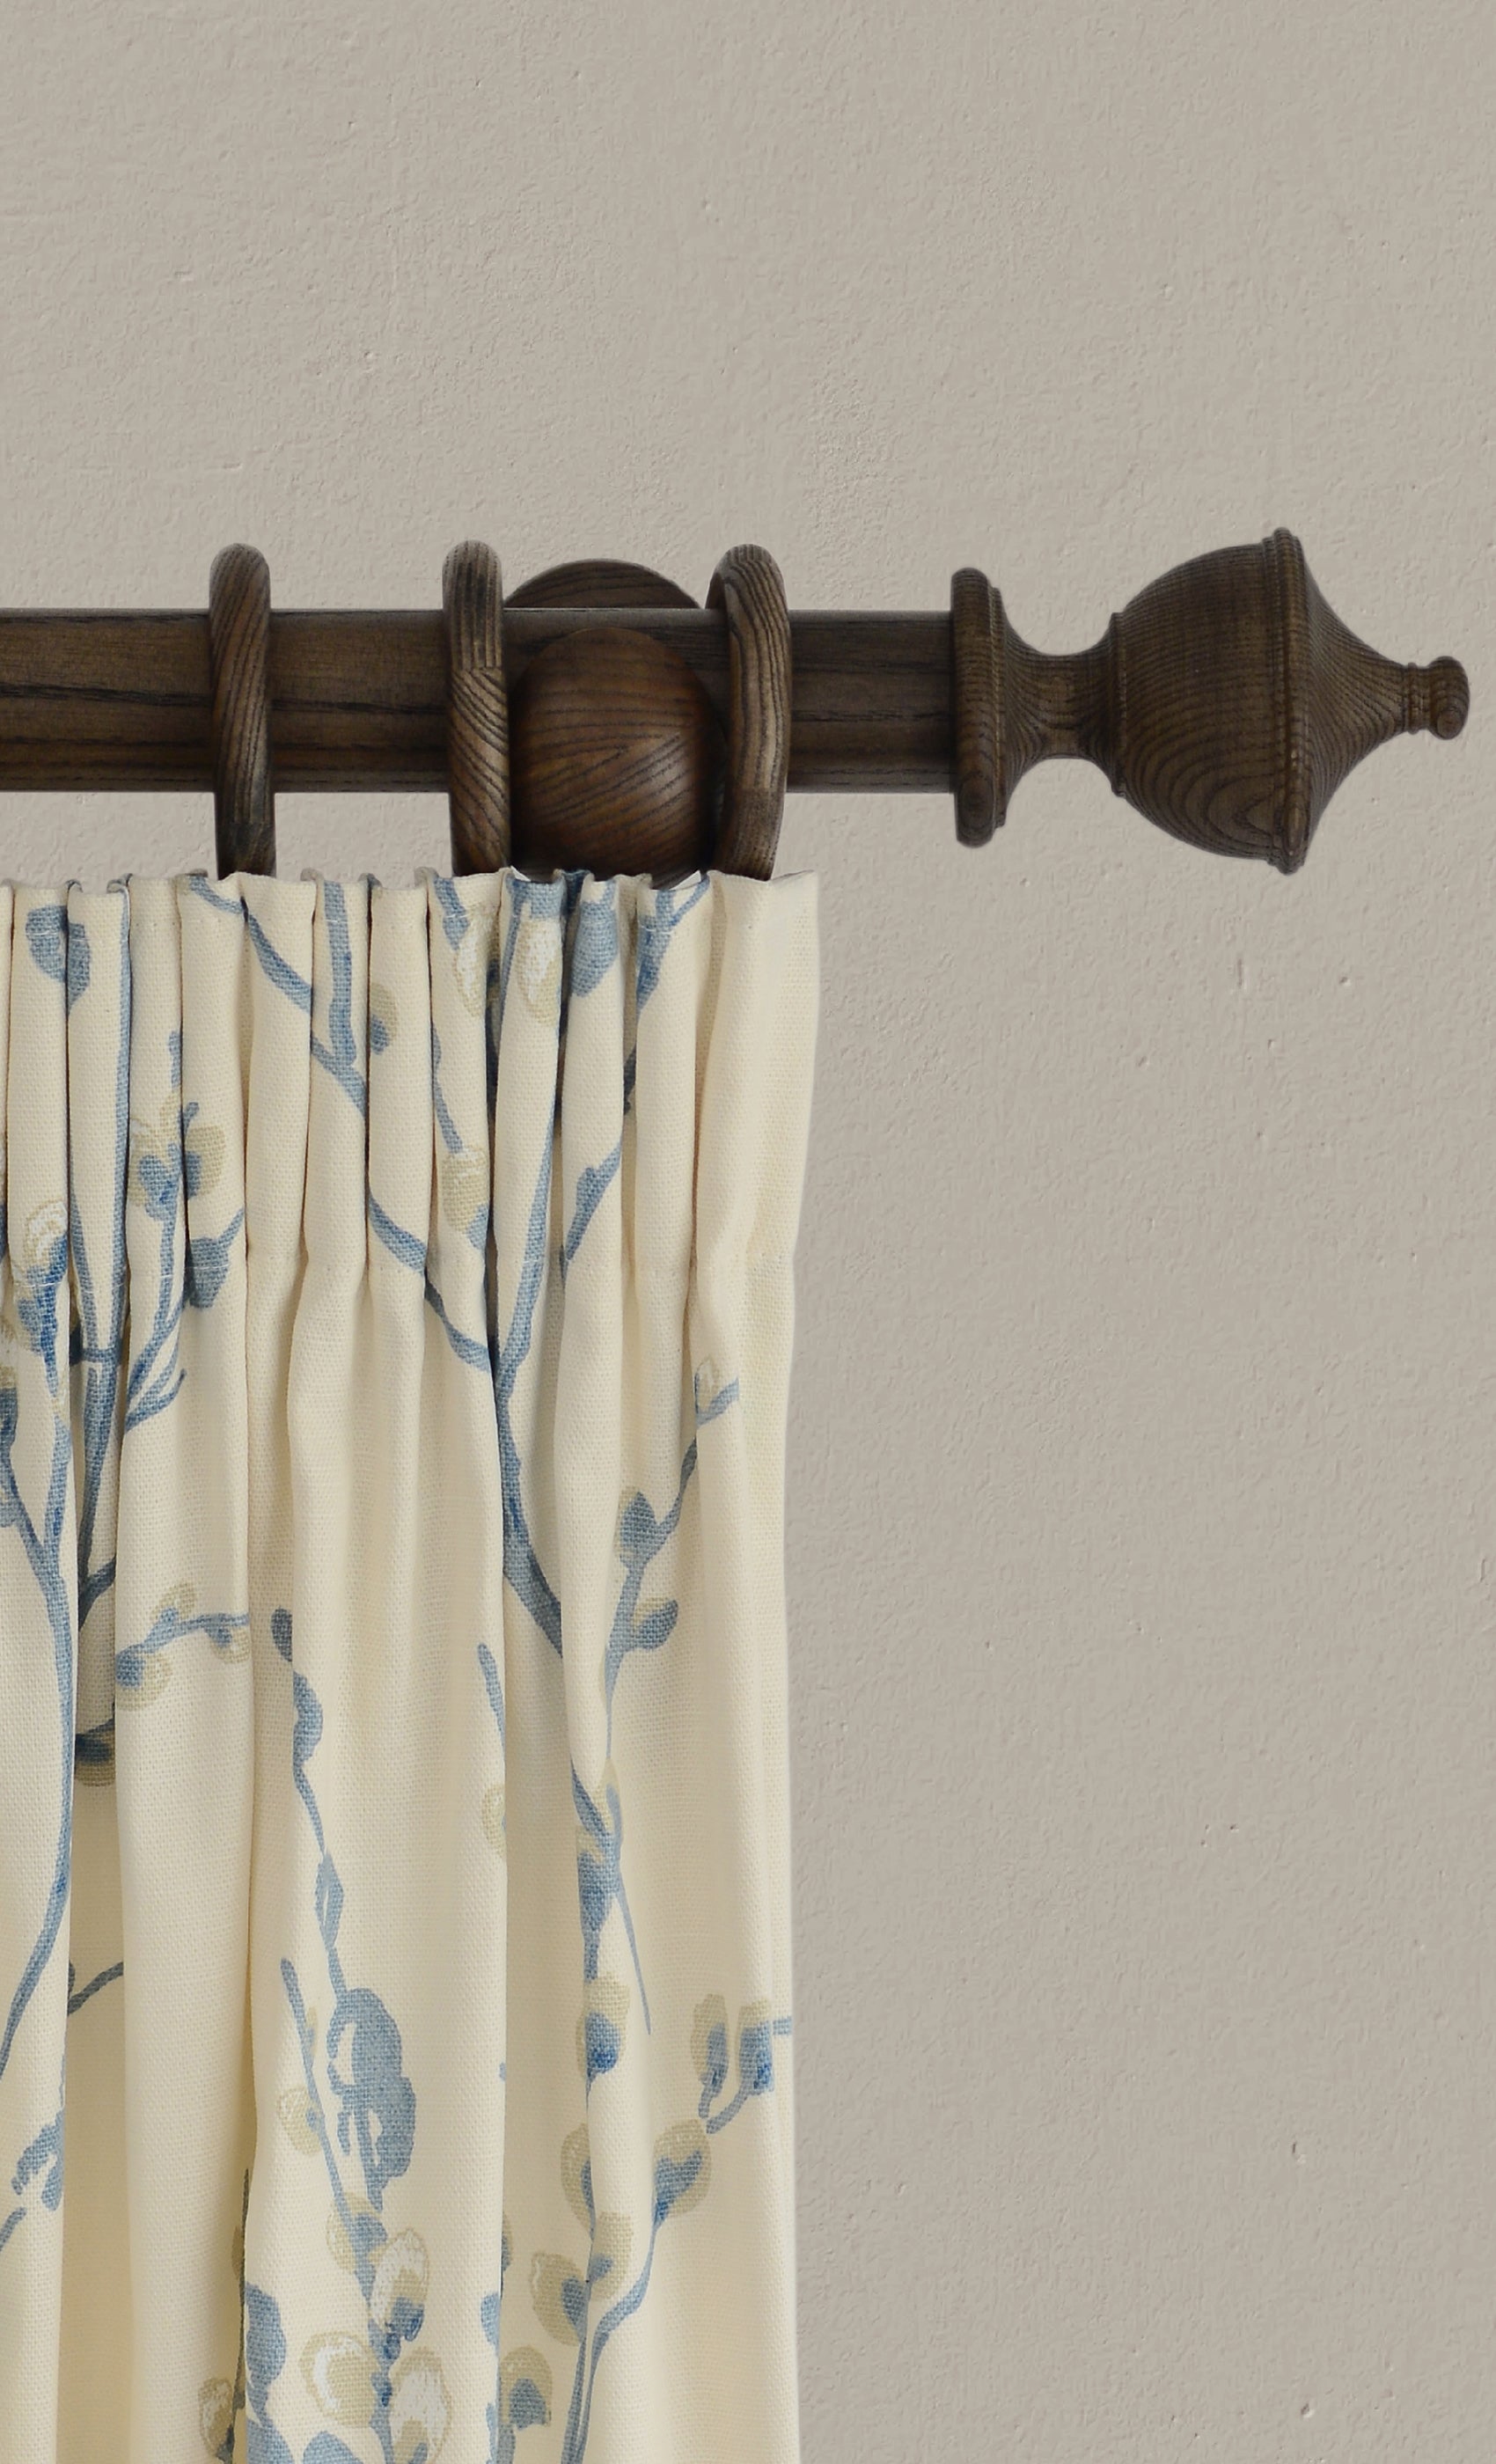 Laura Ashley Haywood Curtain Pole Set in Dark chestnut